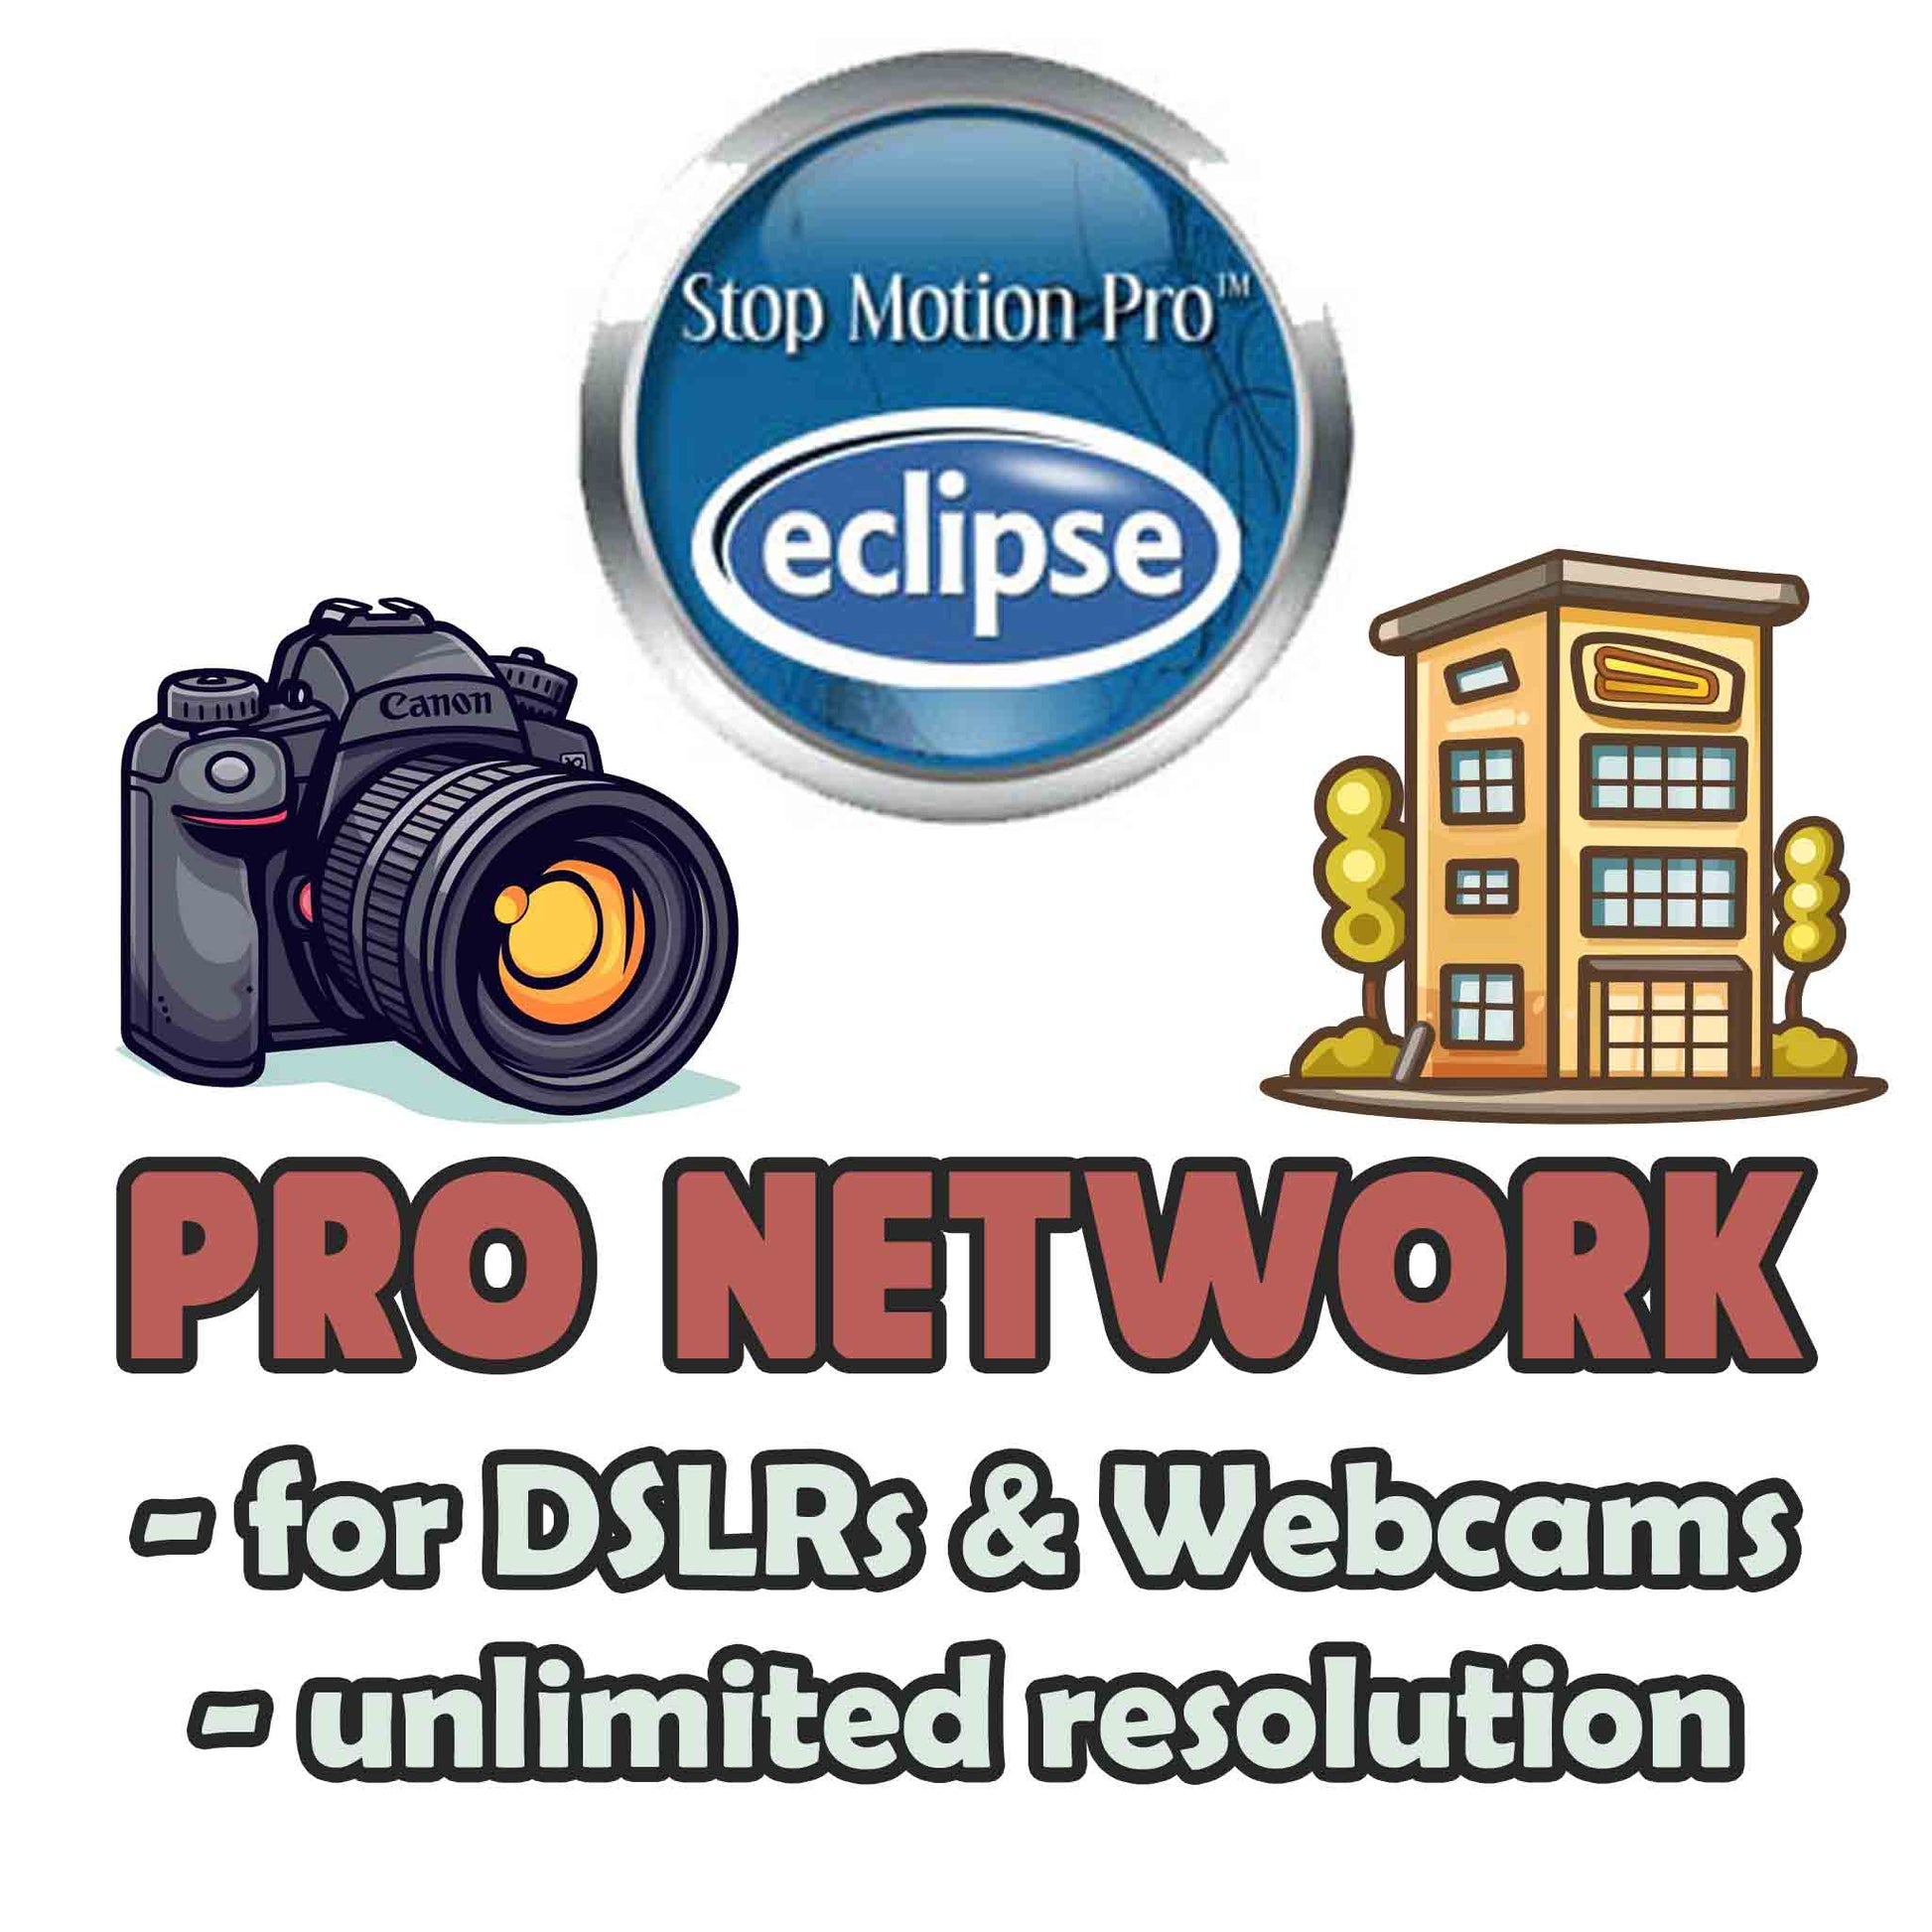 Stop Motion Pro Eclipse DSLR Unlimited Network License